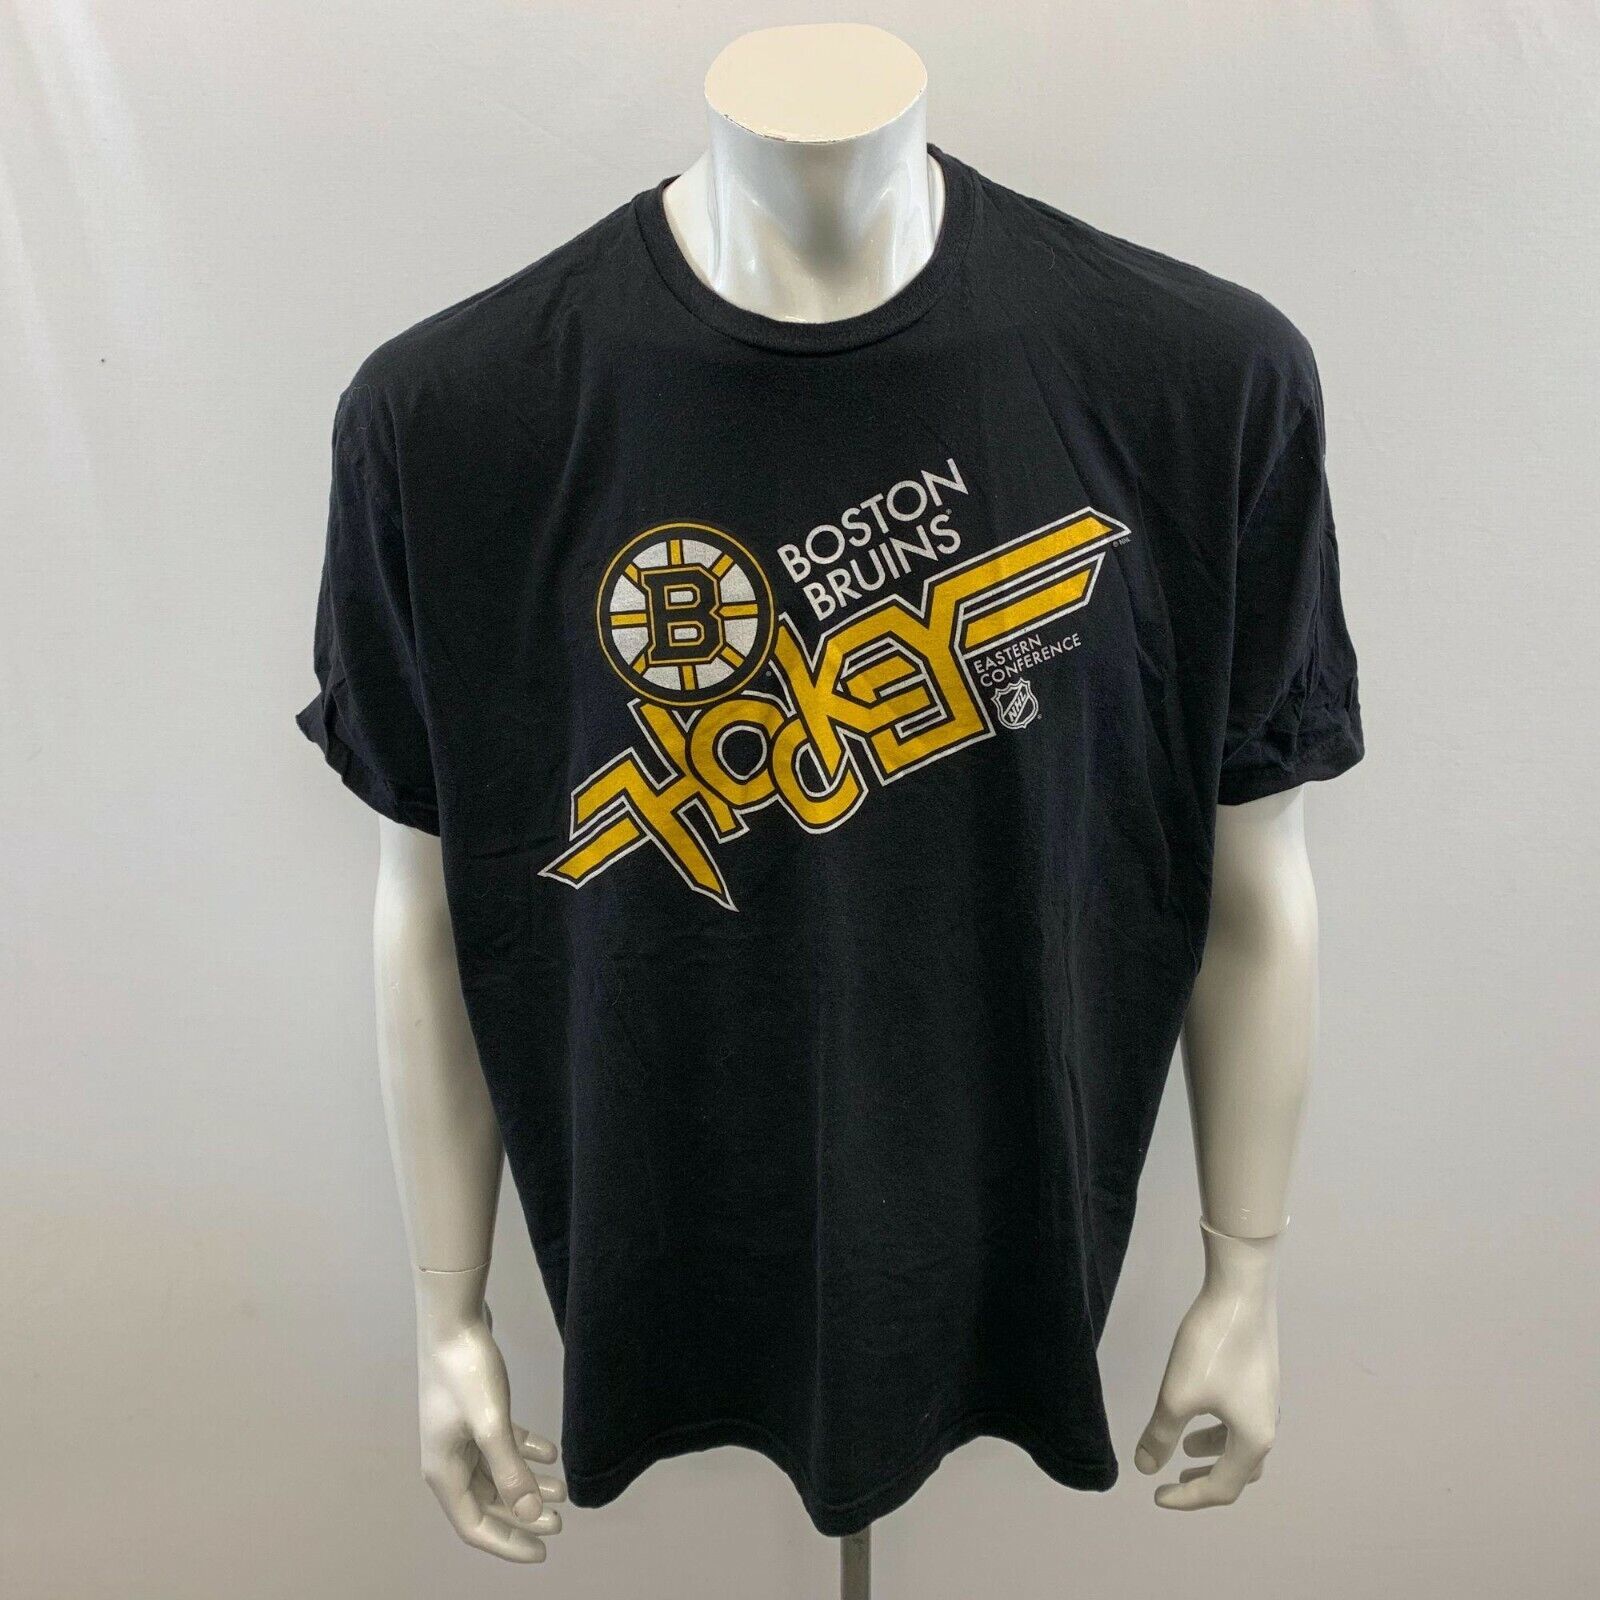 Reebok Men's Black Boston Bruins Graphic Tee Size XXL Cotton - $12.37